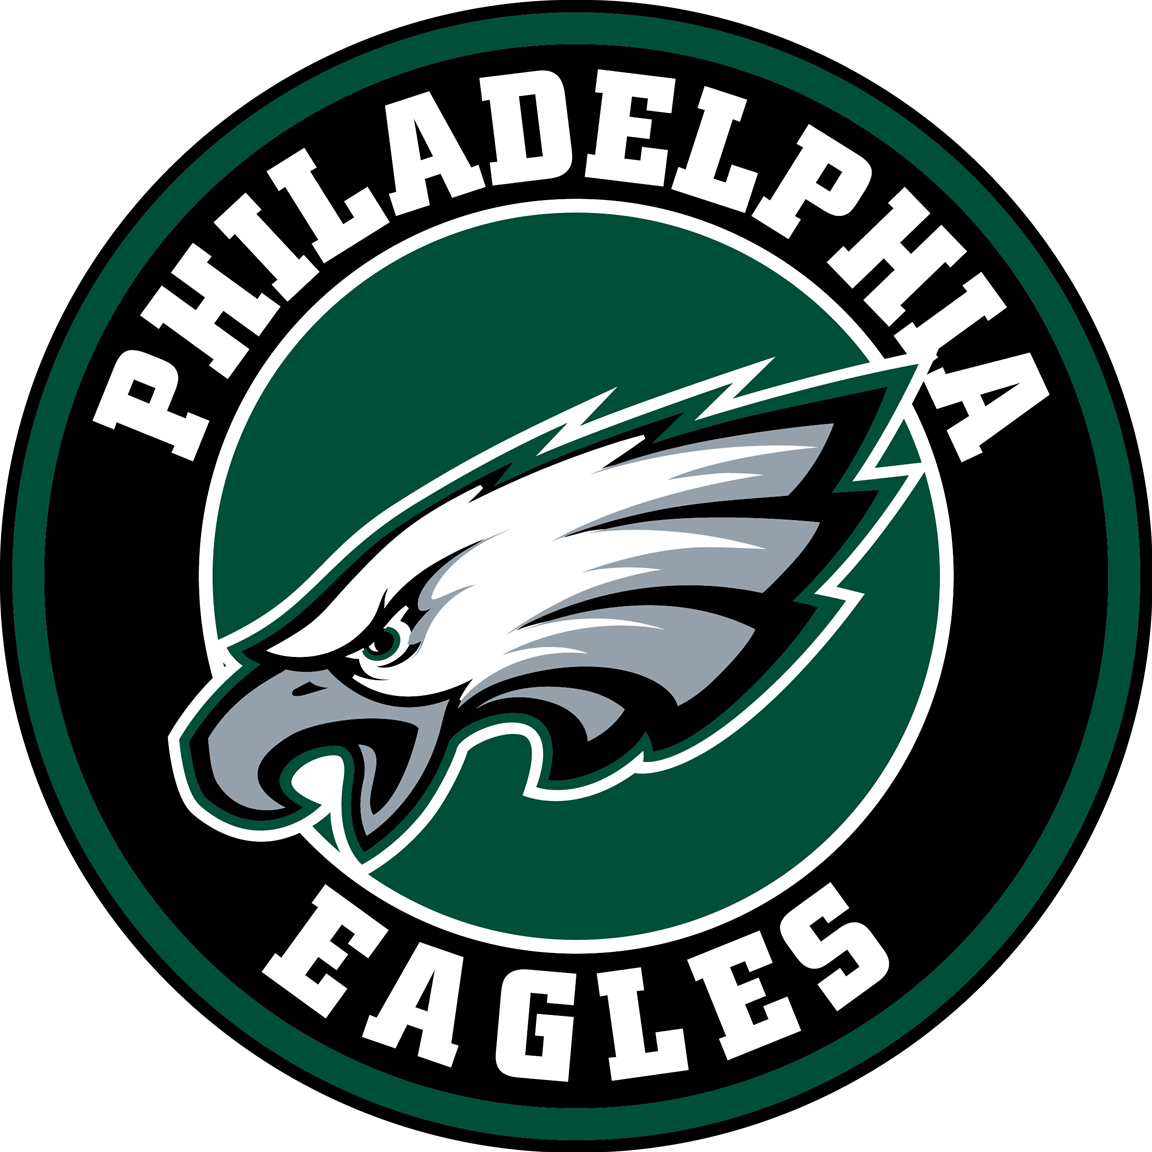 Philadelphia Eagles Tap Handle